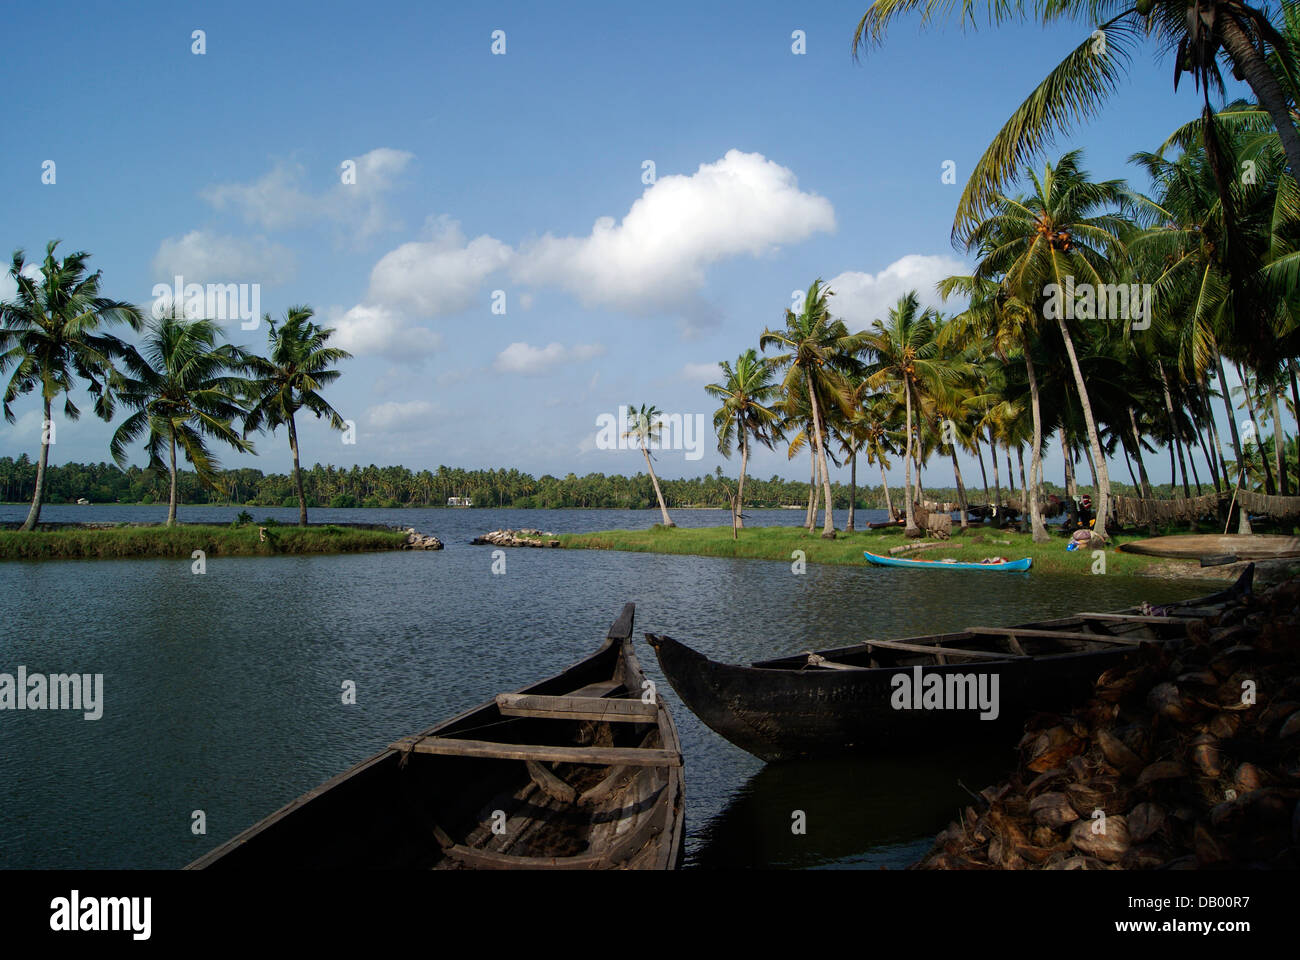 Scenery view of Kerala Backwaters at India Stock Photo